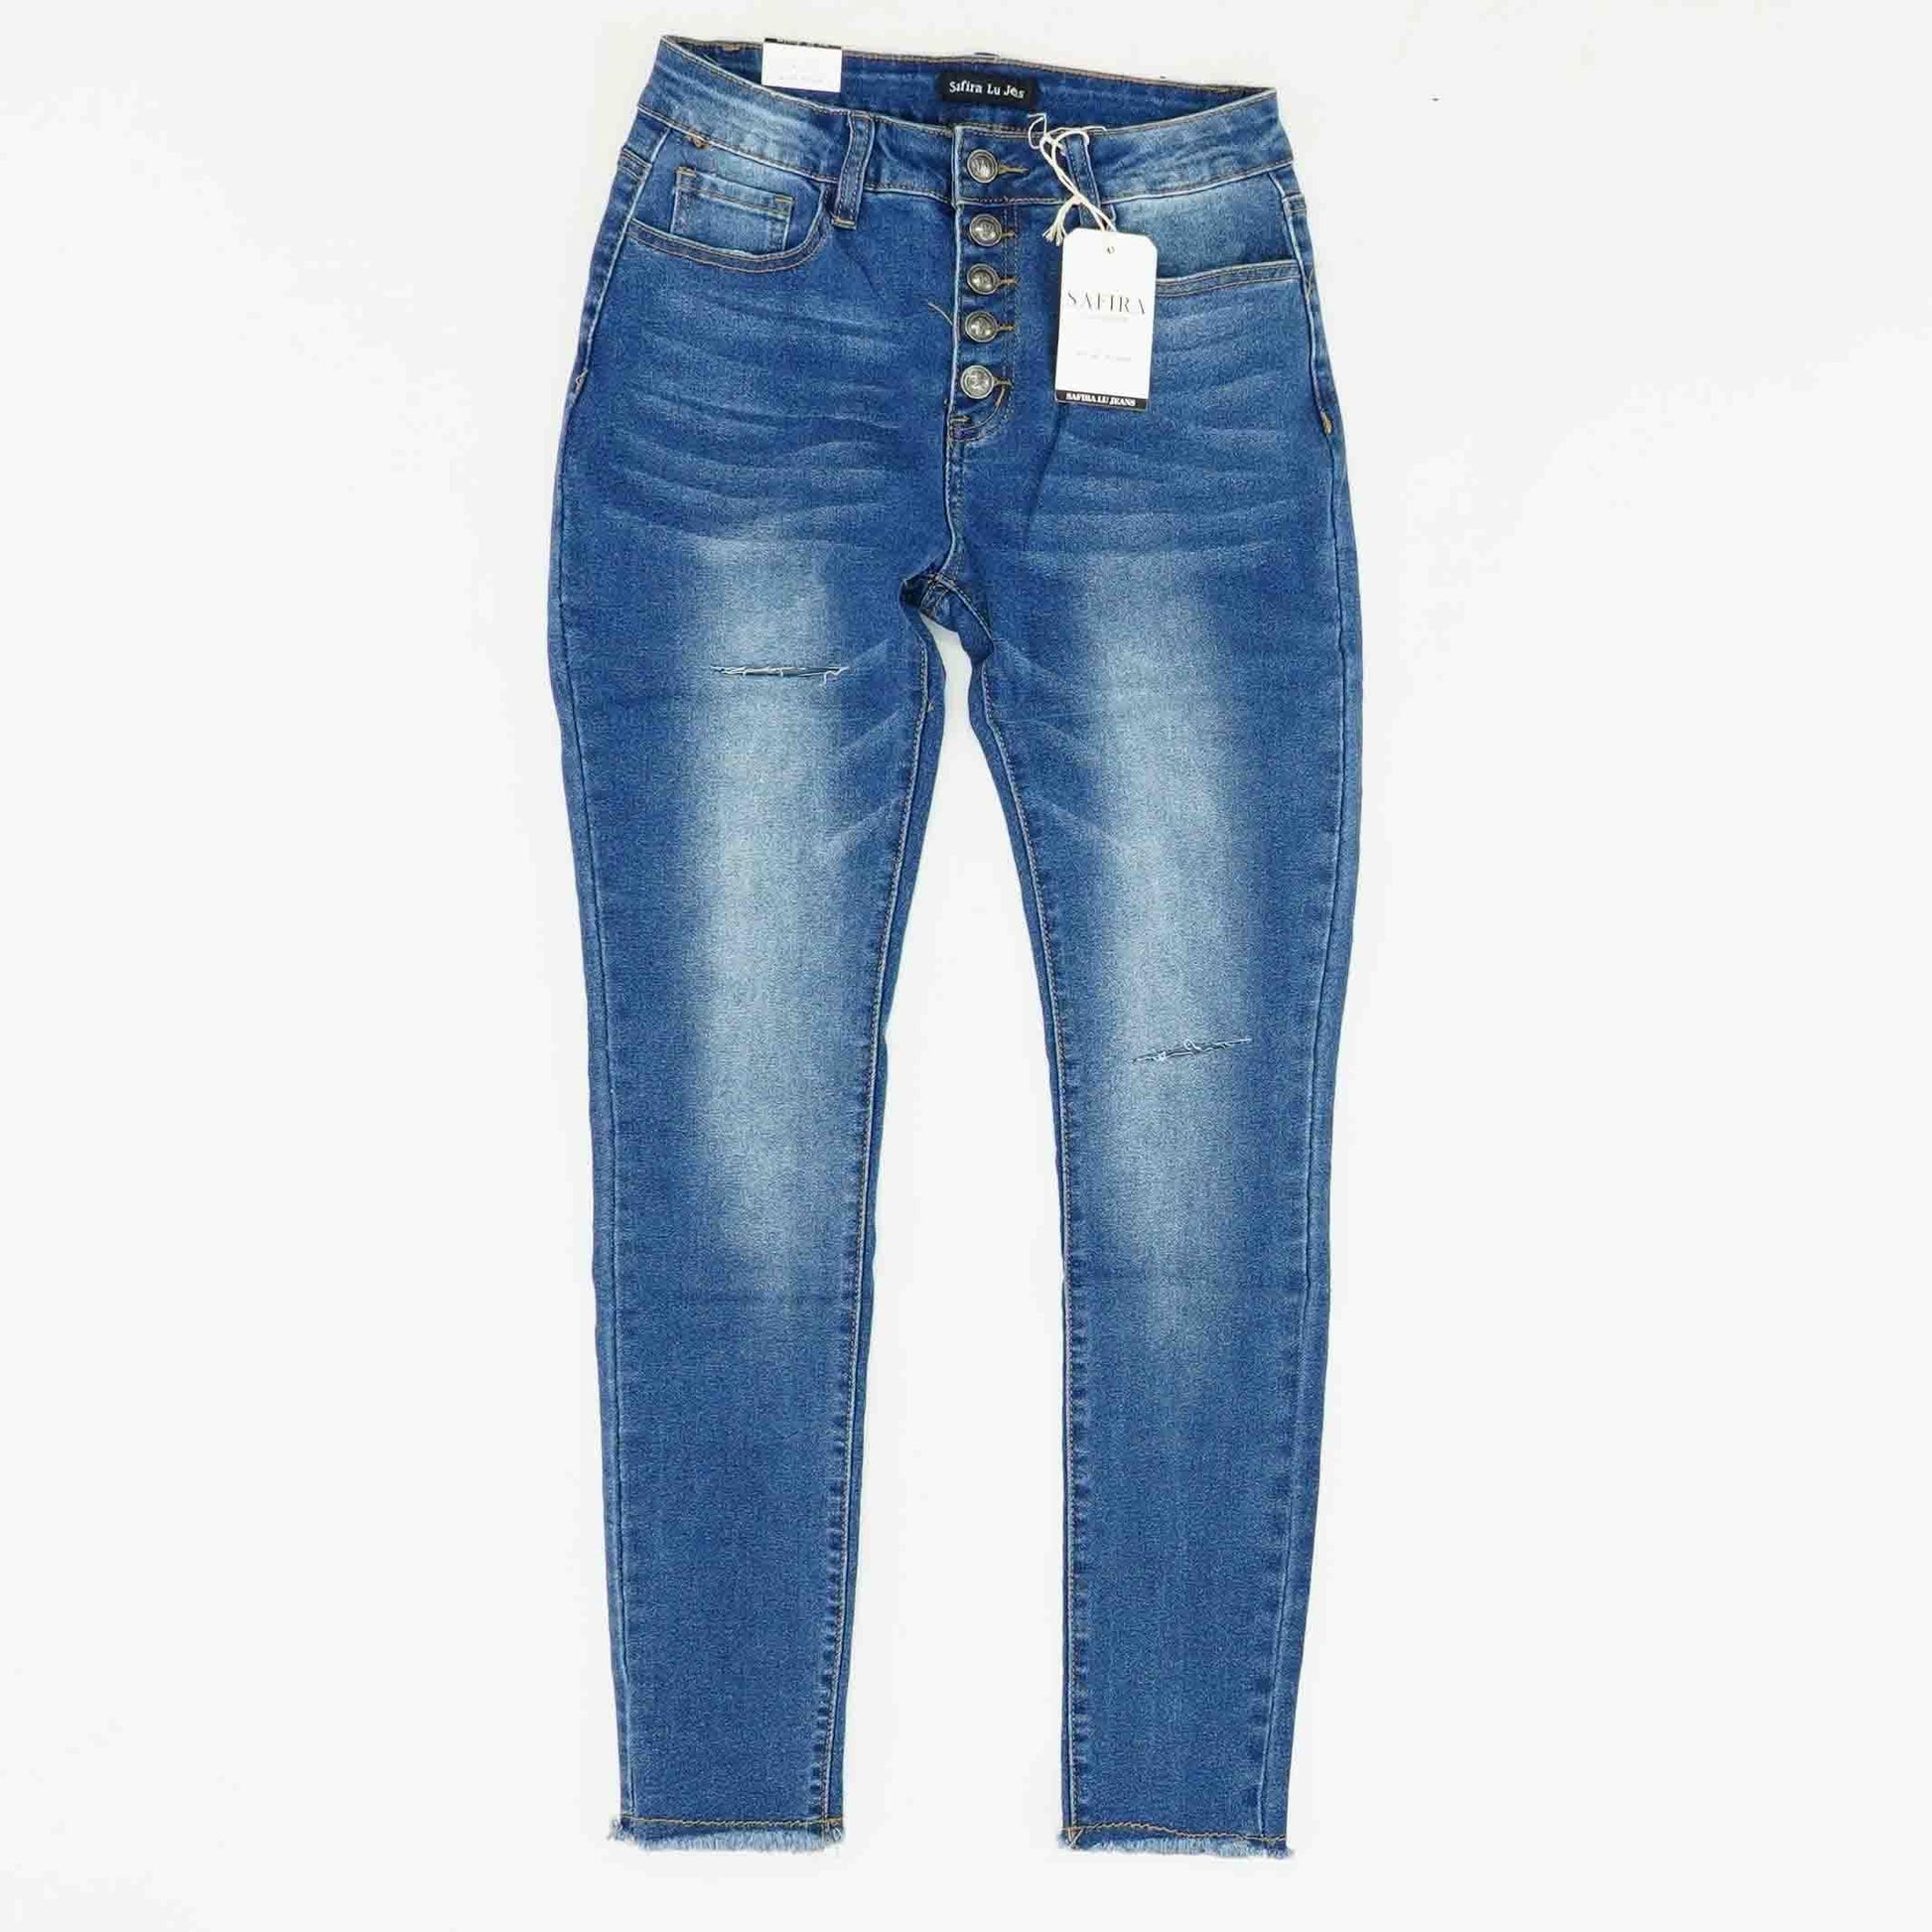 Louis Vuitton - Authenticated Purse - Denim - Jeans Blue for Women, Very Good Condition